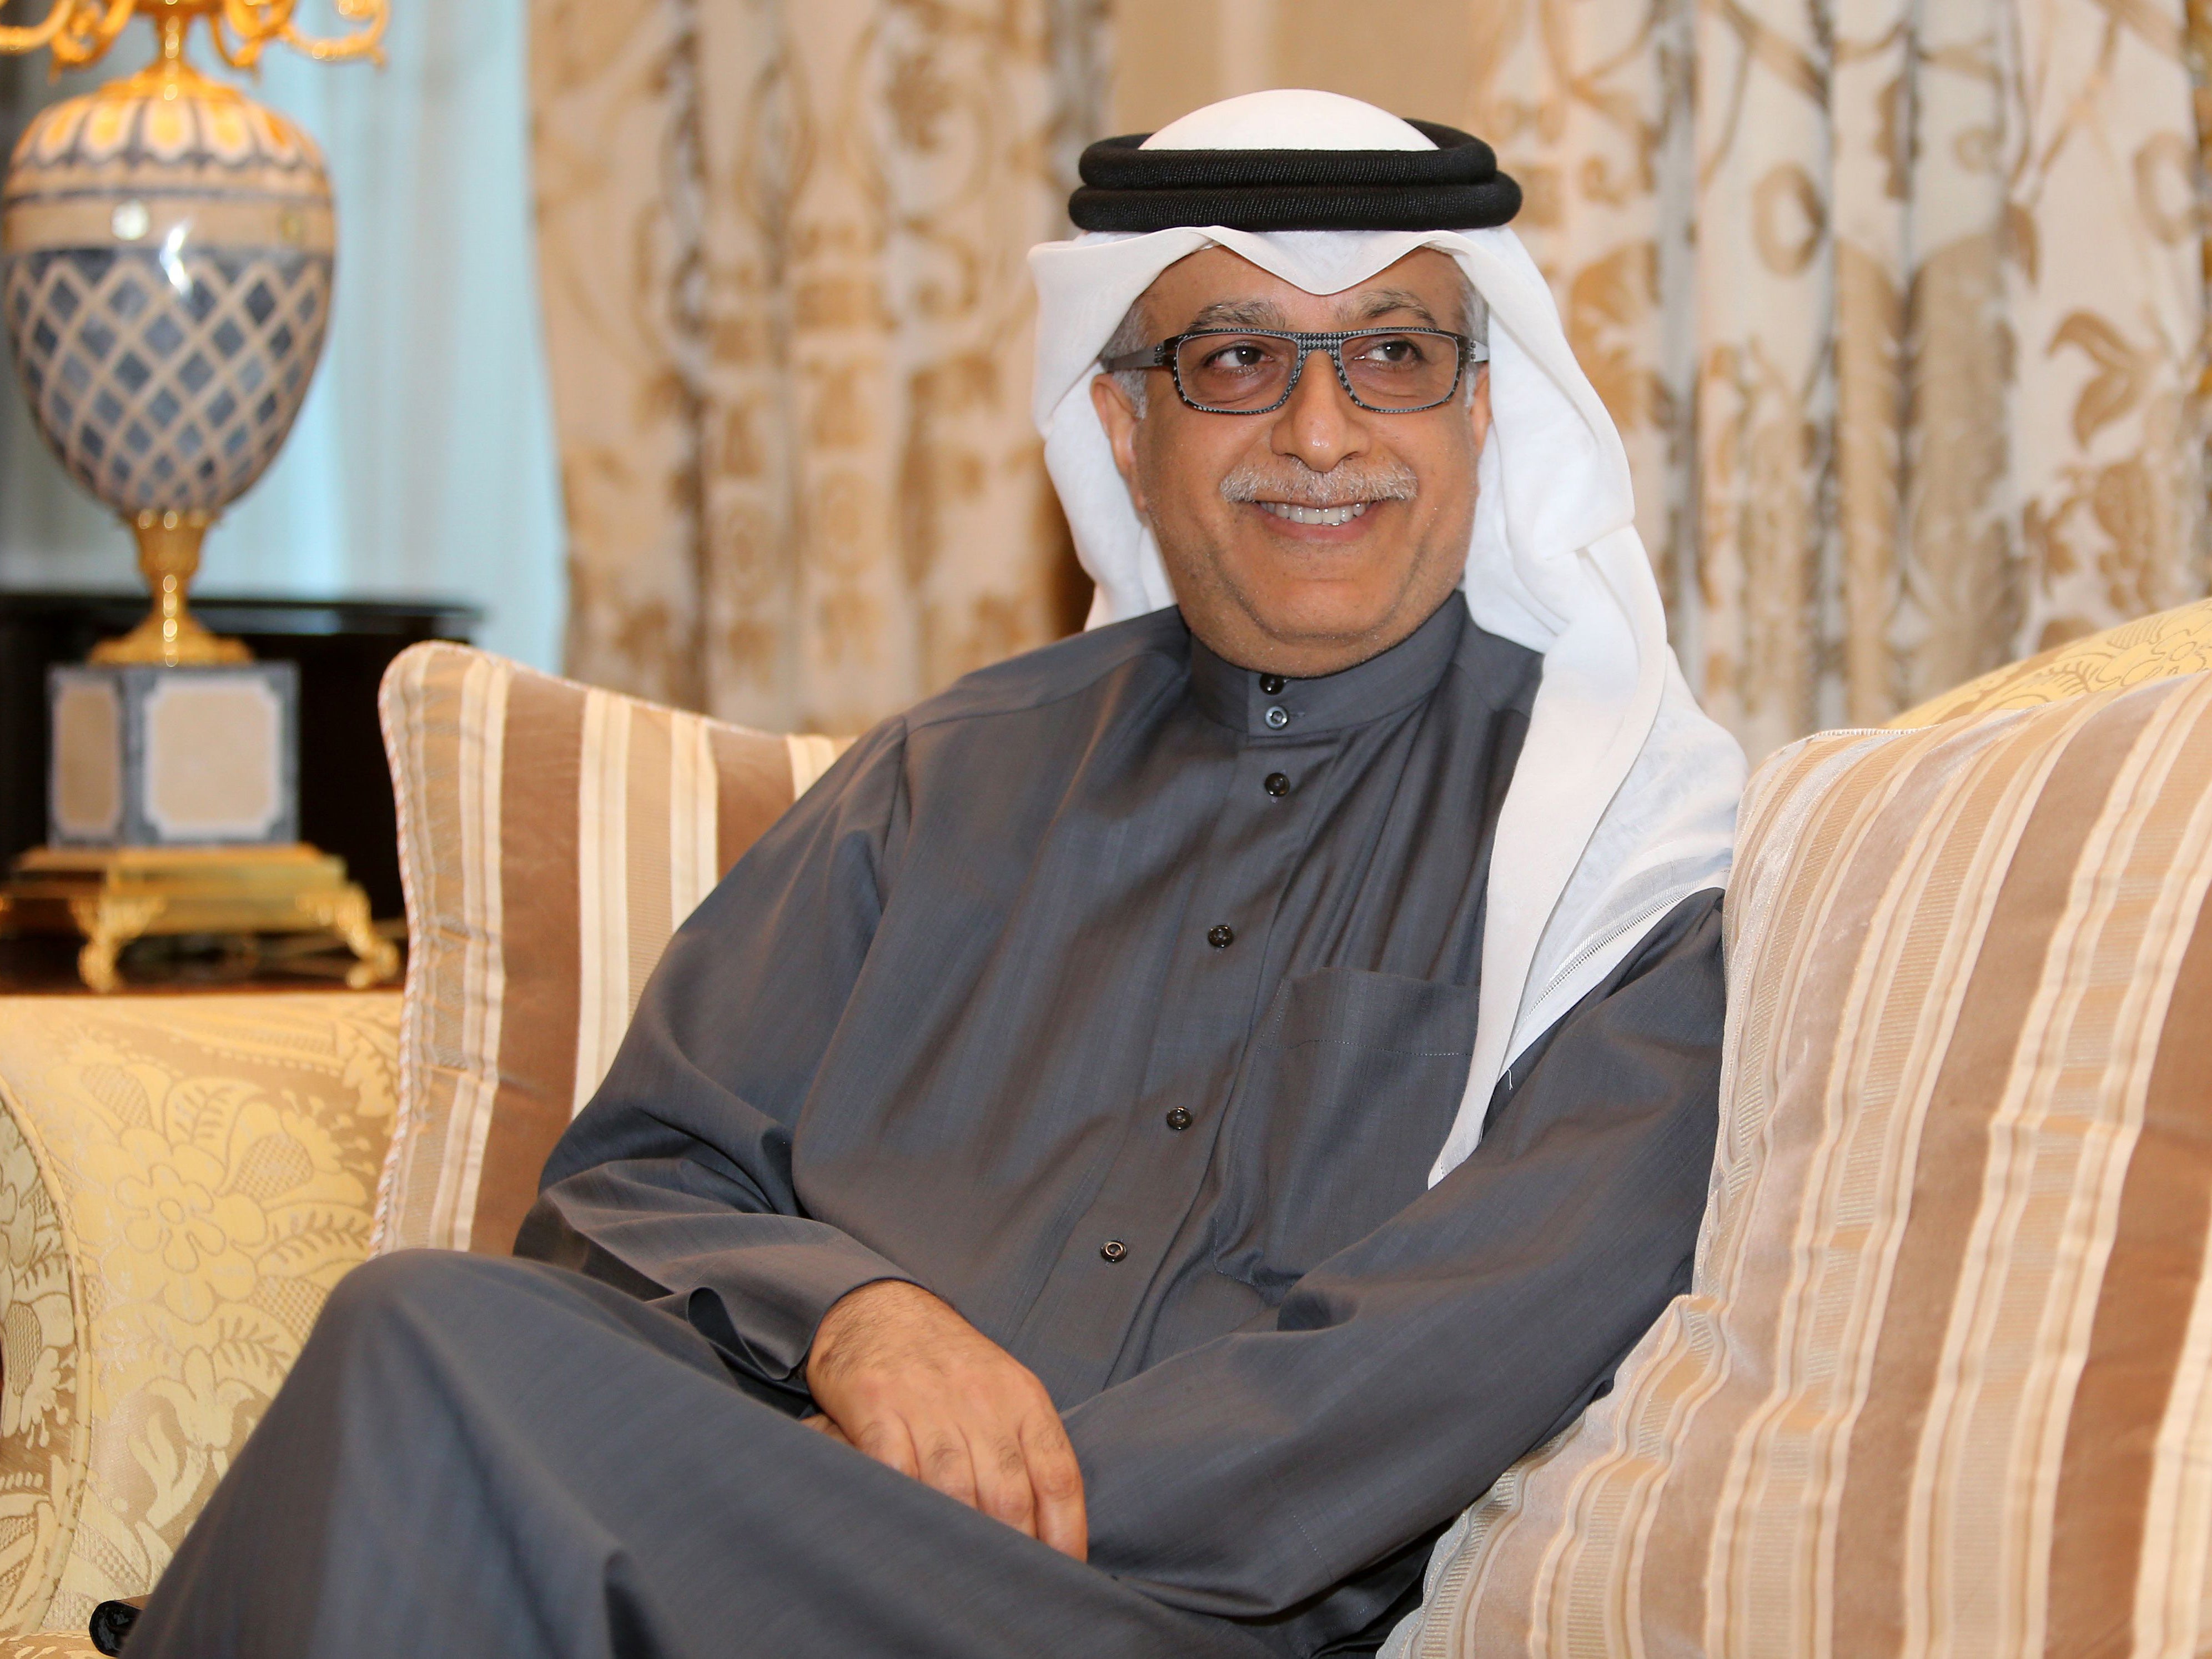 Sheikh al-Khalifa is the current Fifa vice-president